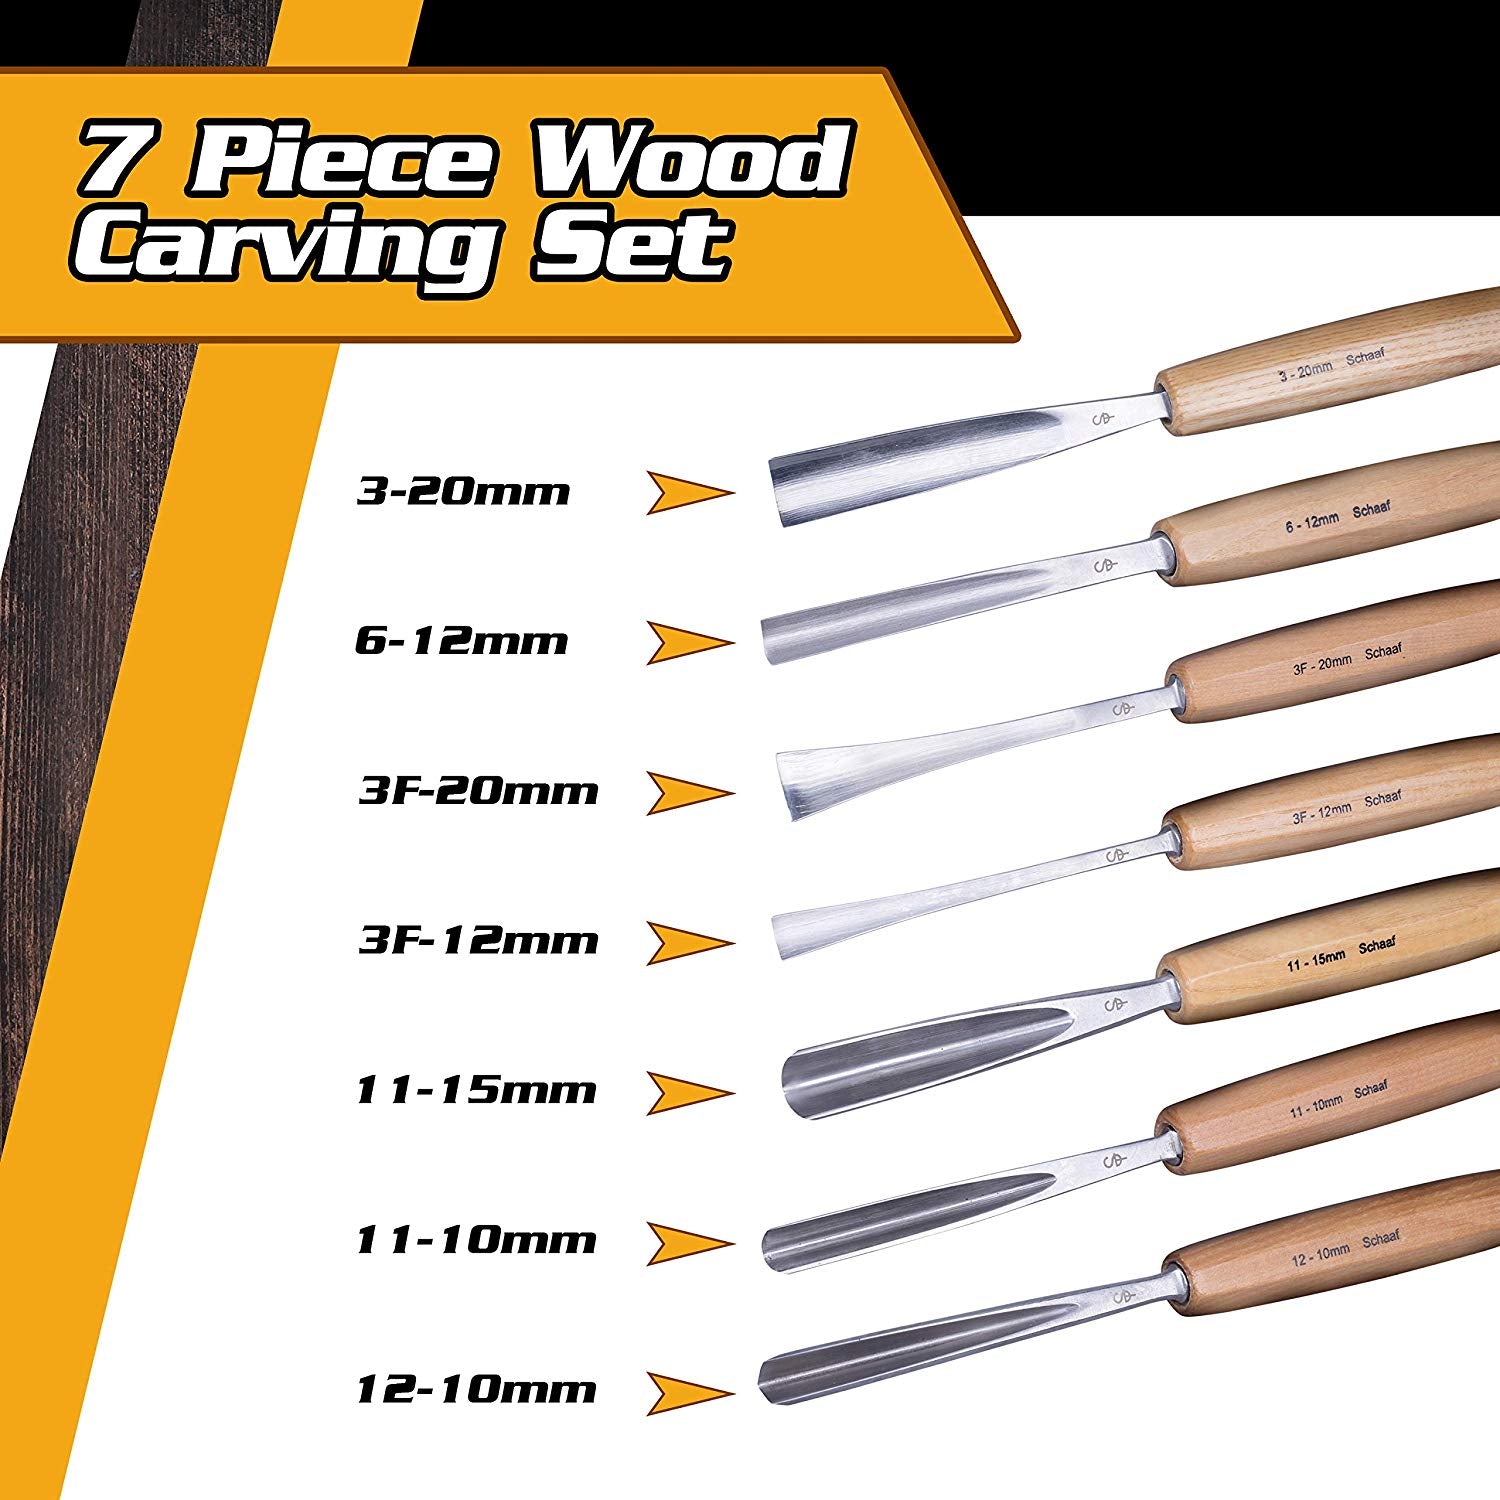 Premium wood carving tool sizes